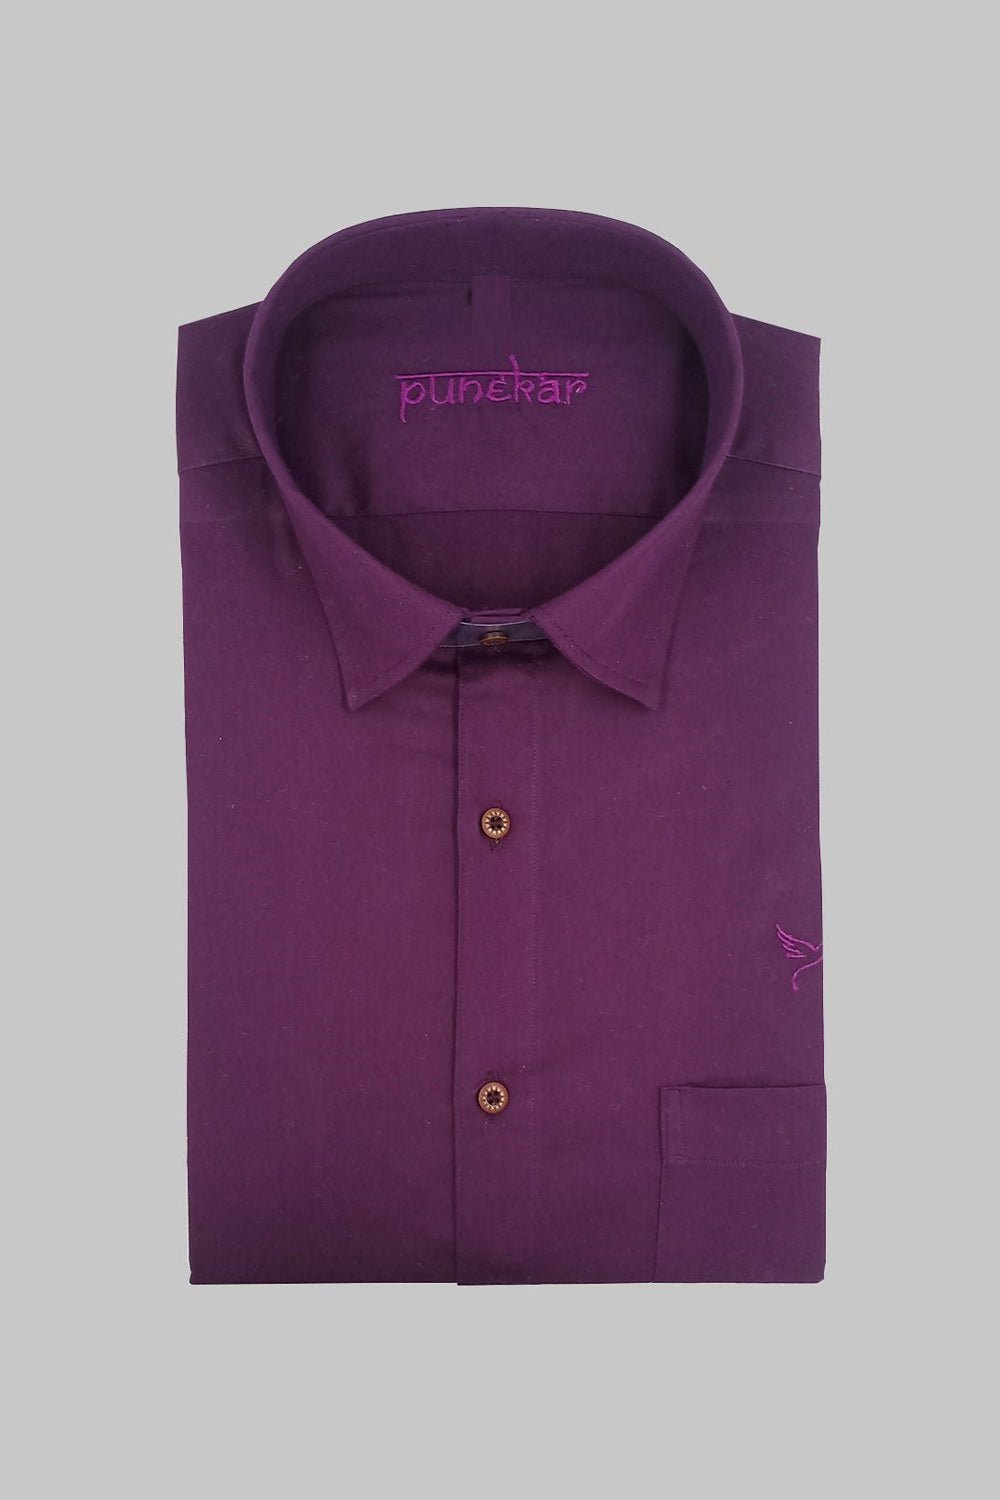 Punekar Cotton Satin Purple Color Full Sleeves Formal Shirt for Men&